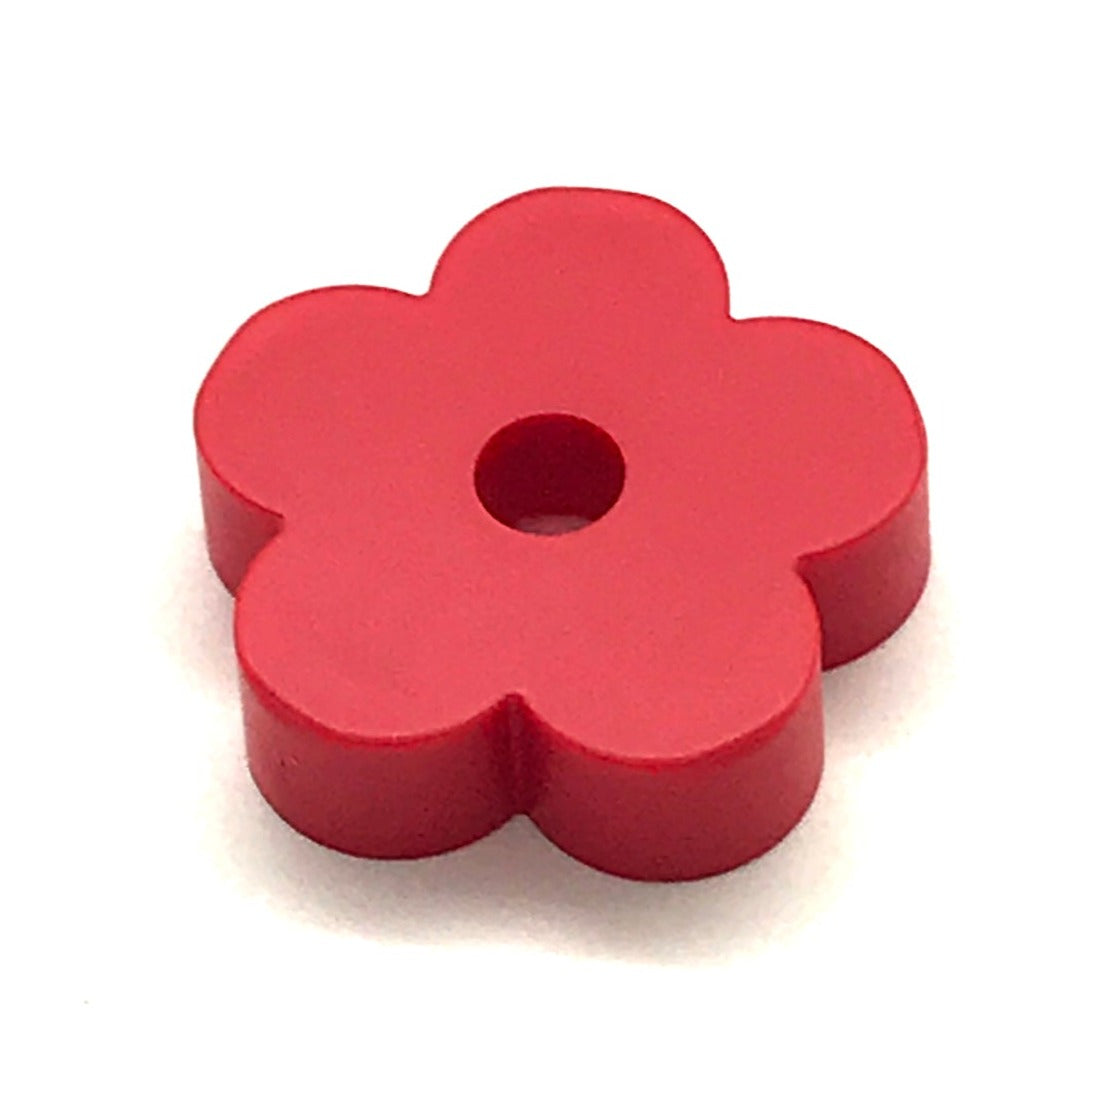 45 Adapter (plastic flower)